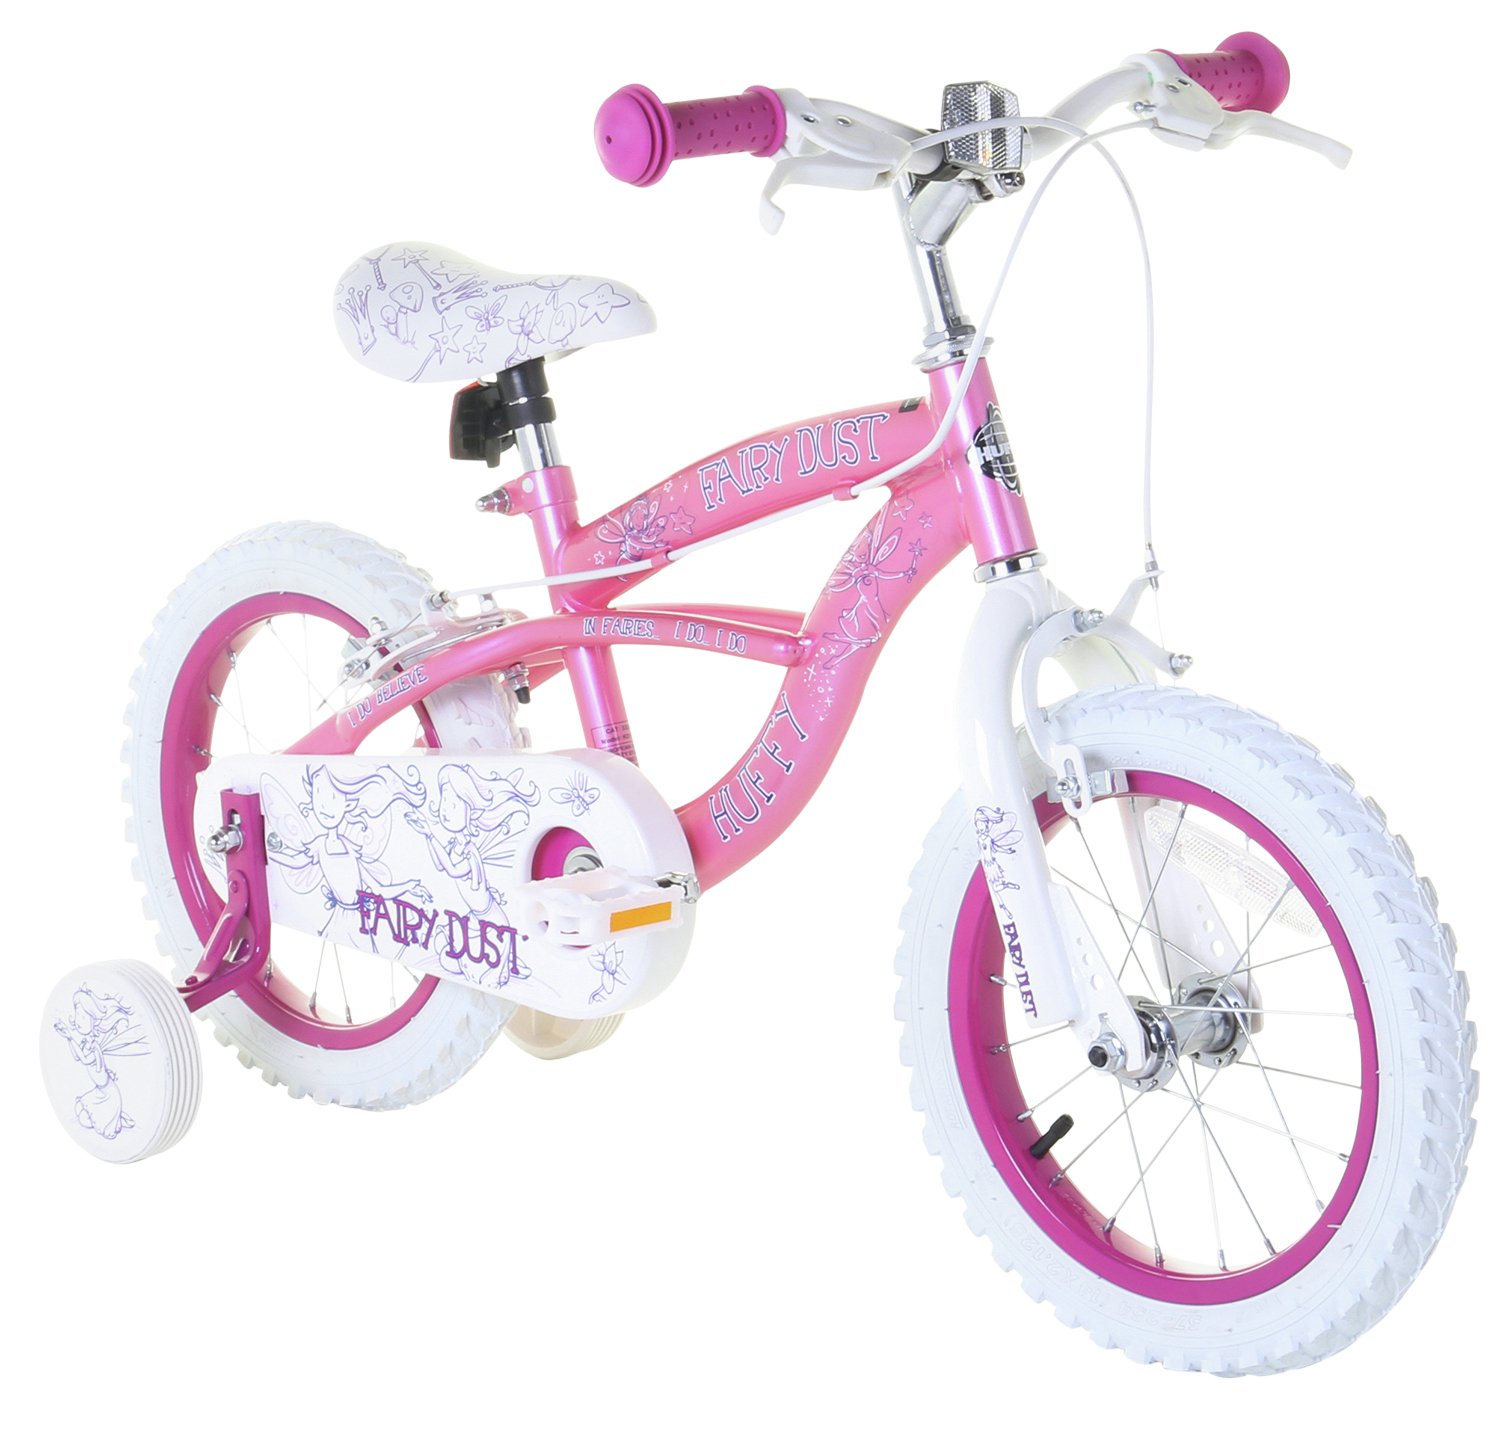 14 inch wheel kids bike